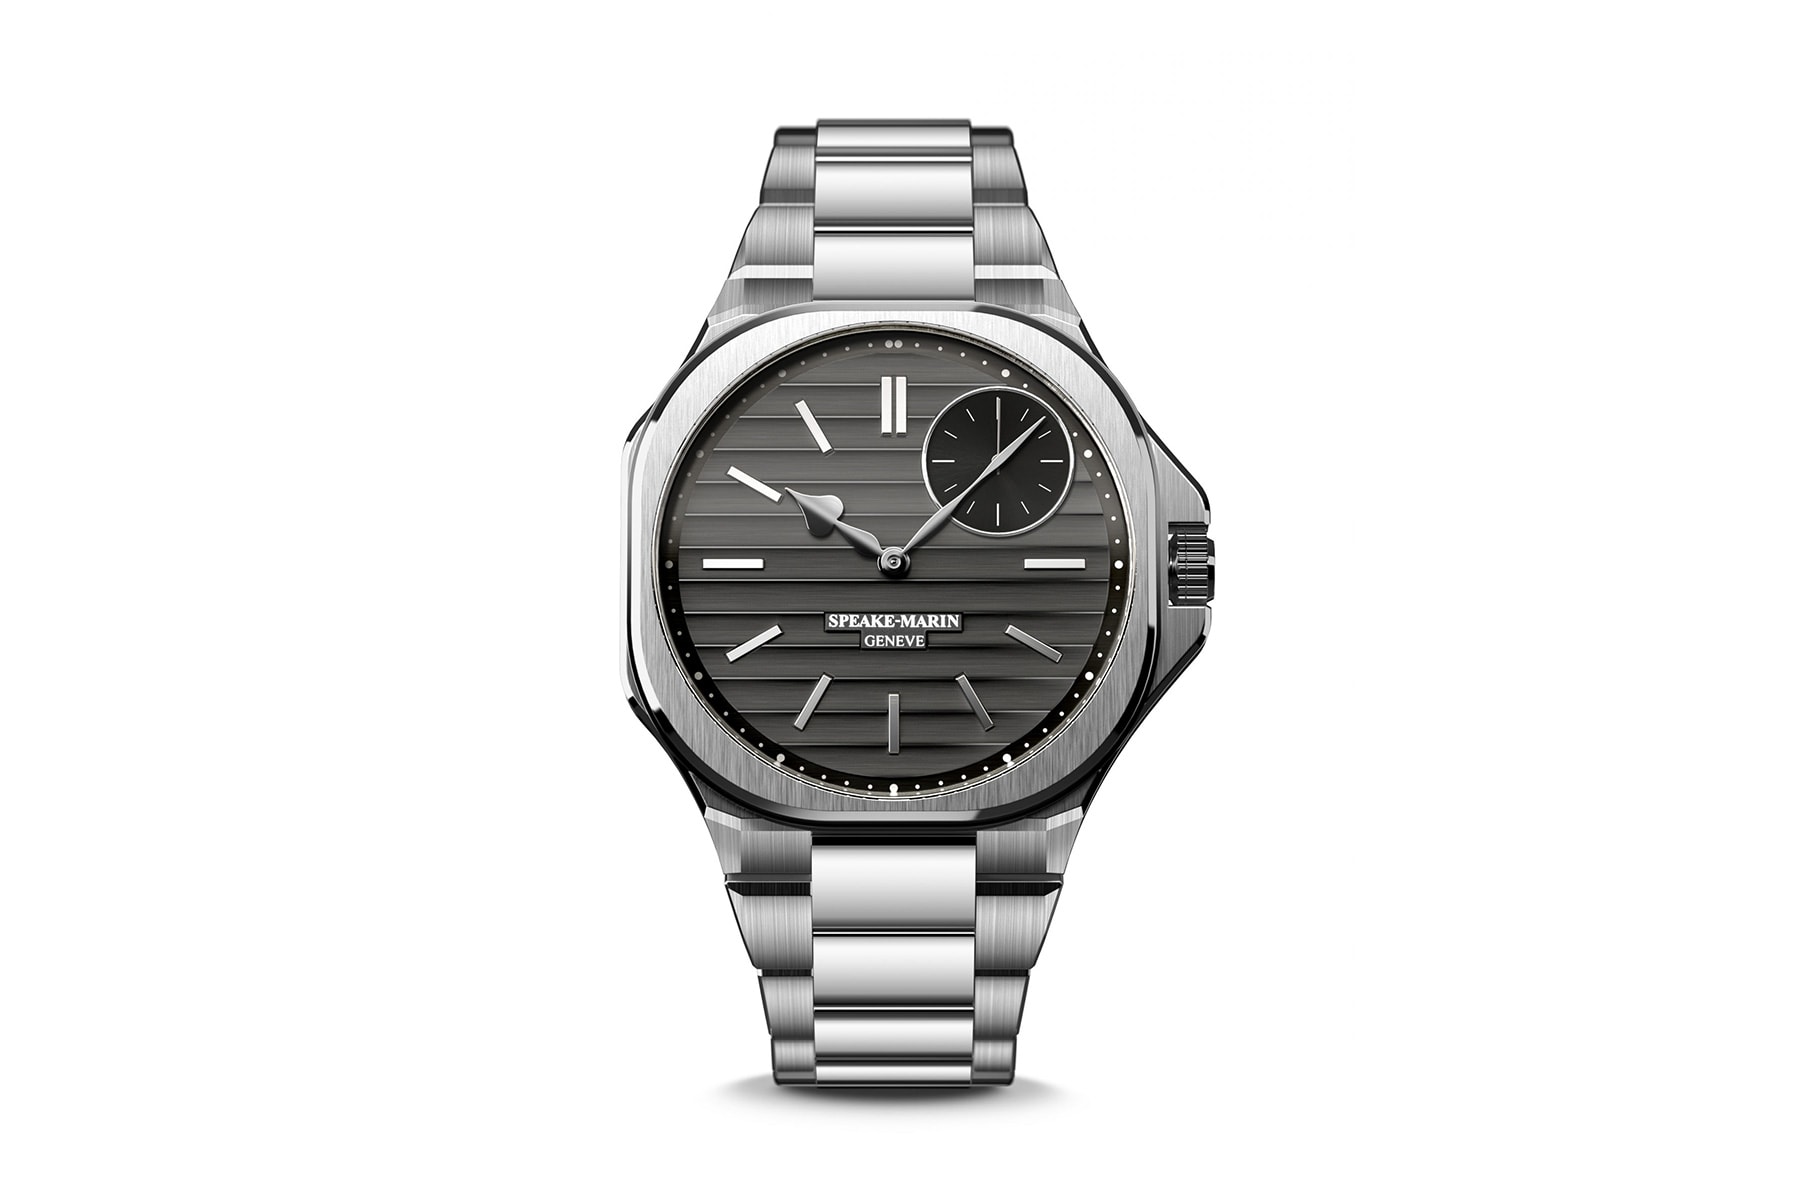 speake marin ripples watch release info Big Ben Accessories luxury watches automatic geneve 